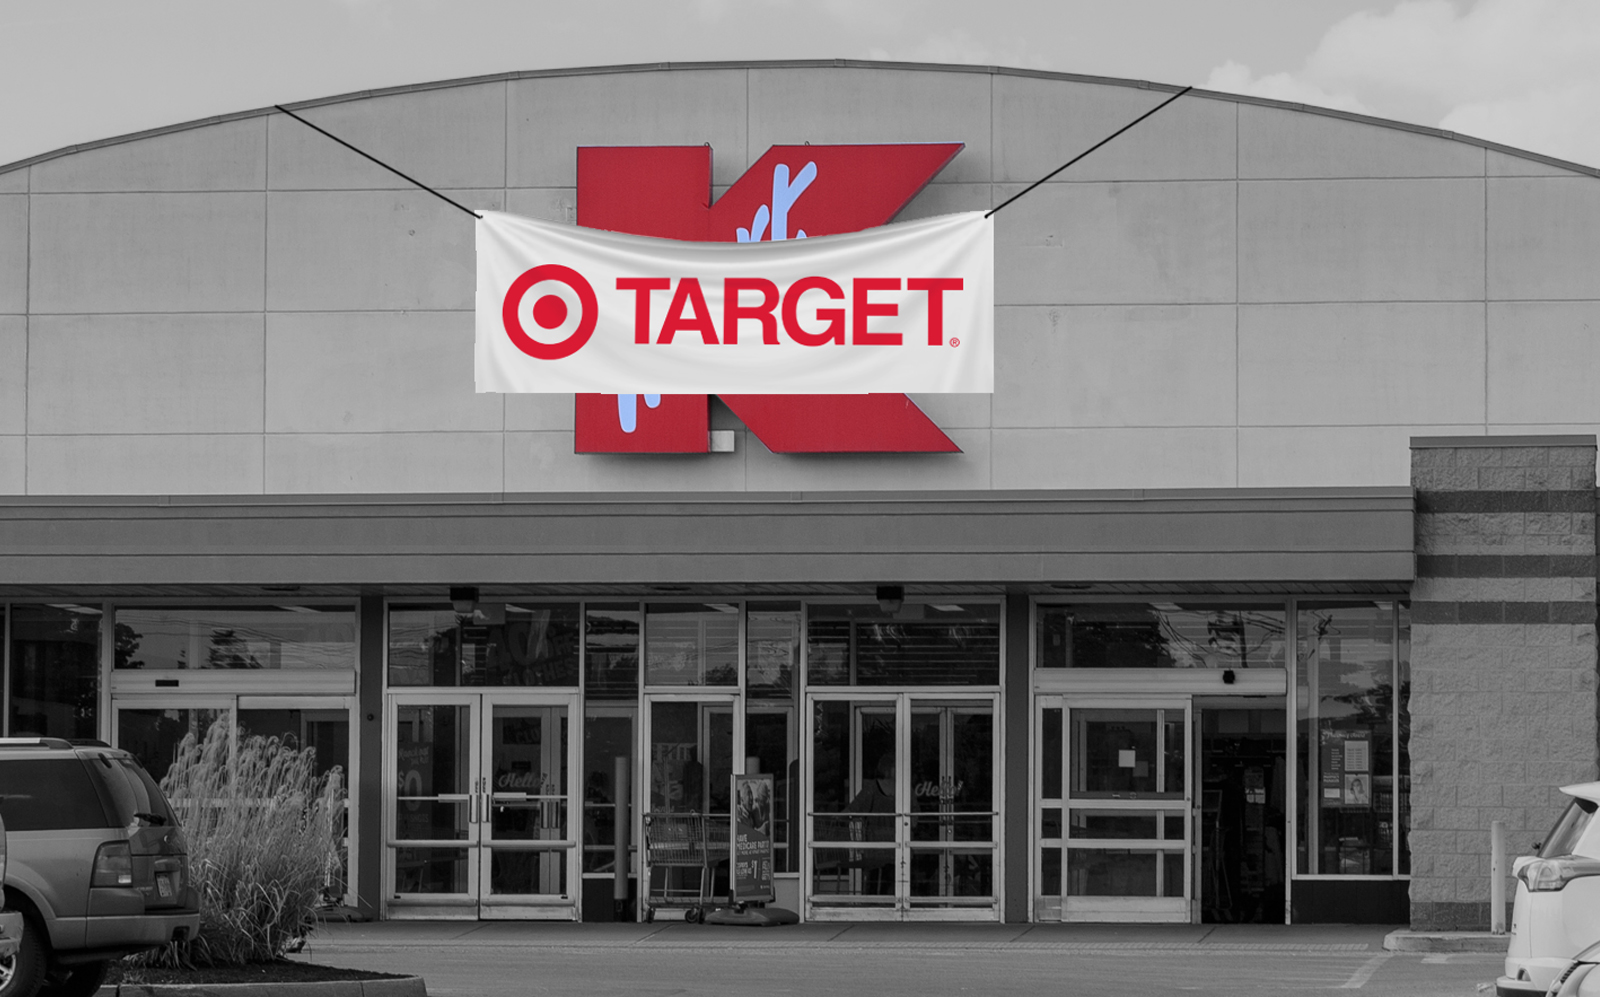 Kmart's newest target market: 12-year-old boys. - Brogan & Partners